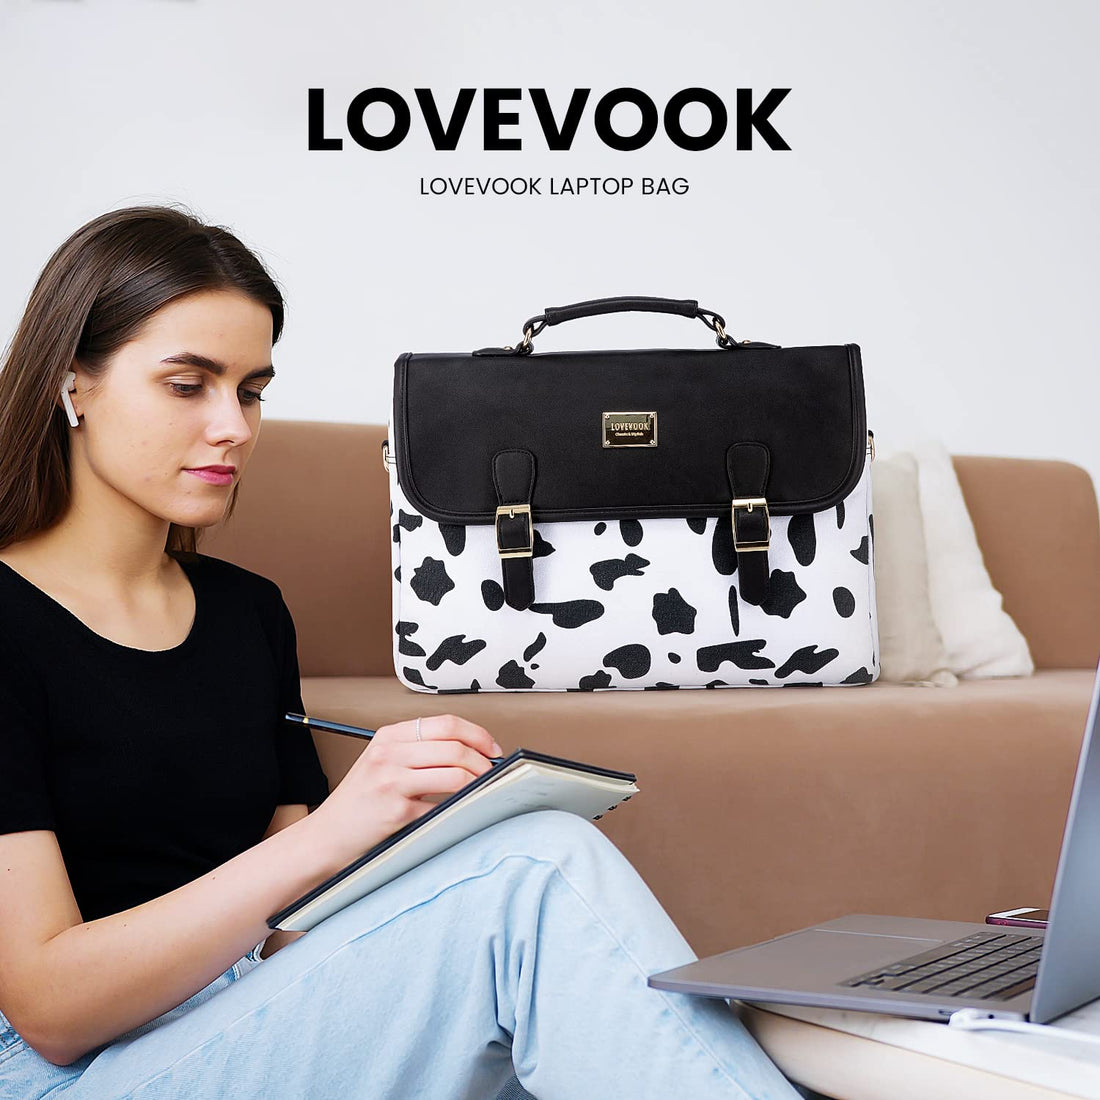 LOVEVOOK Computer Bag Laptop Bag for Women Cute Laptop Messenger Bag for Work College, COW